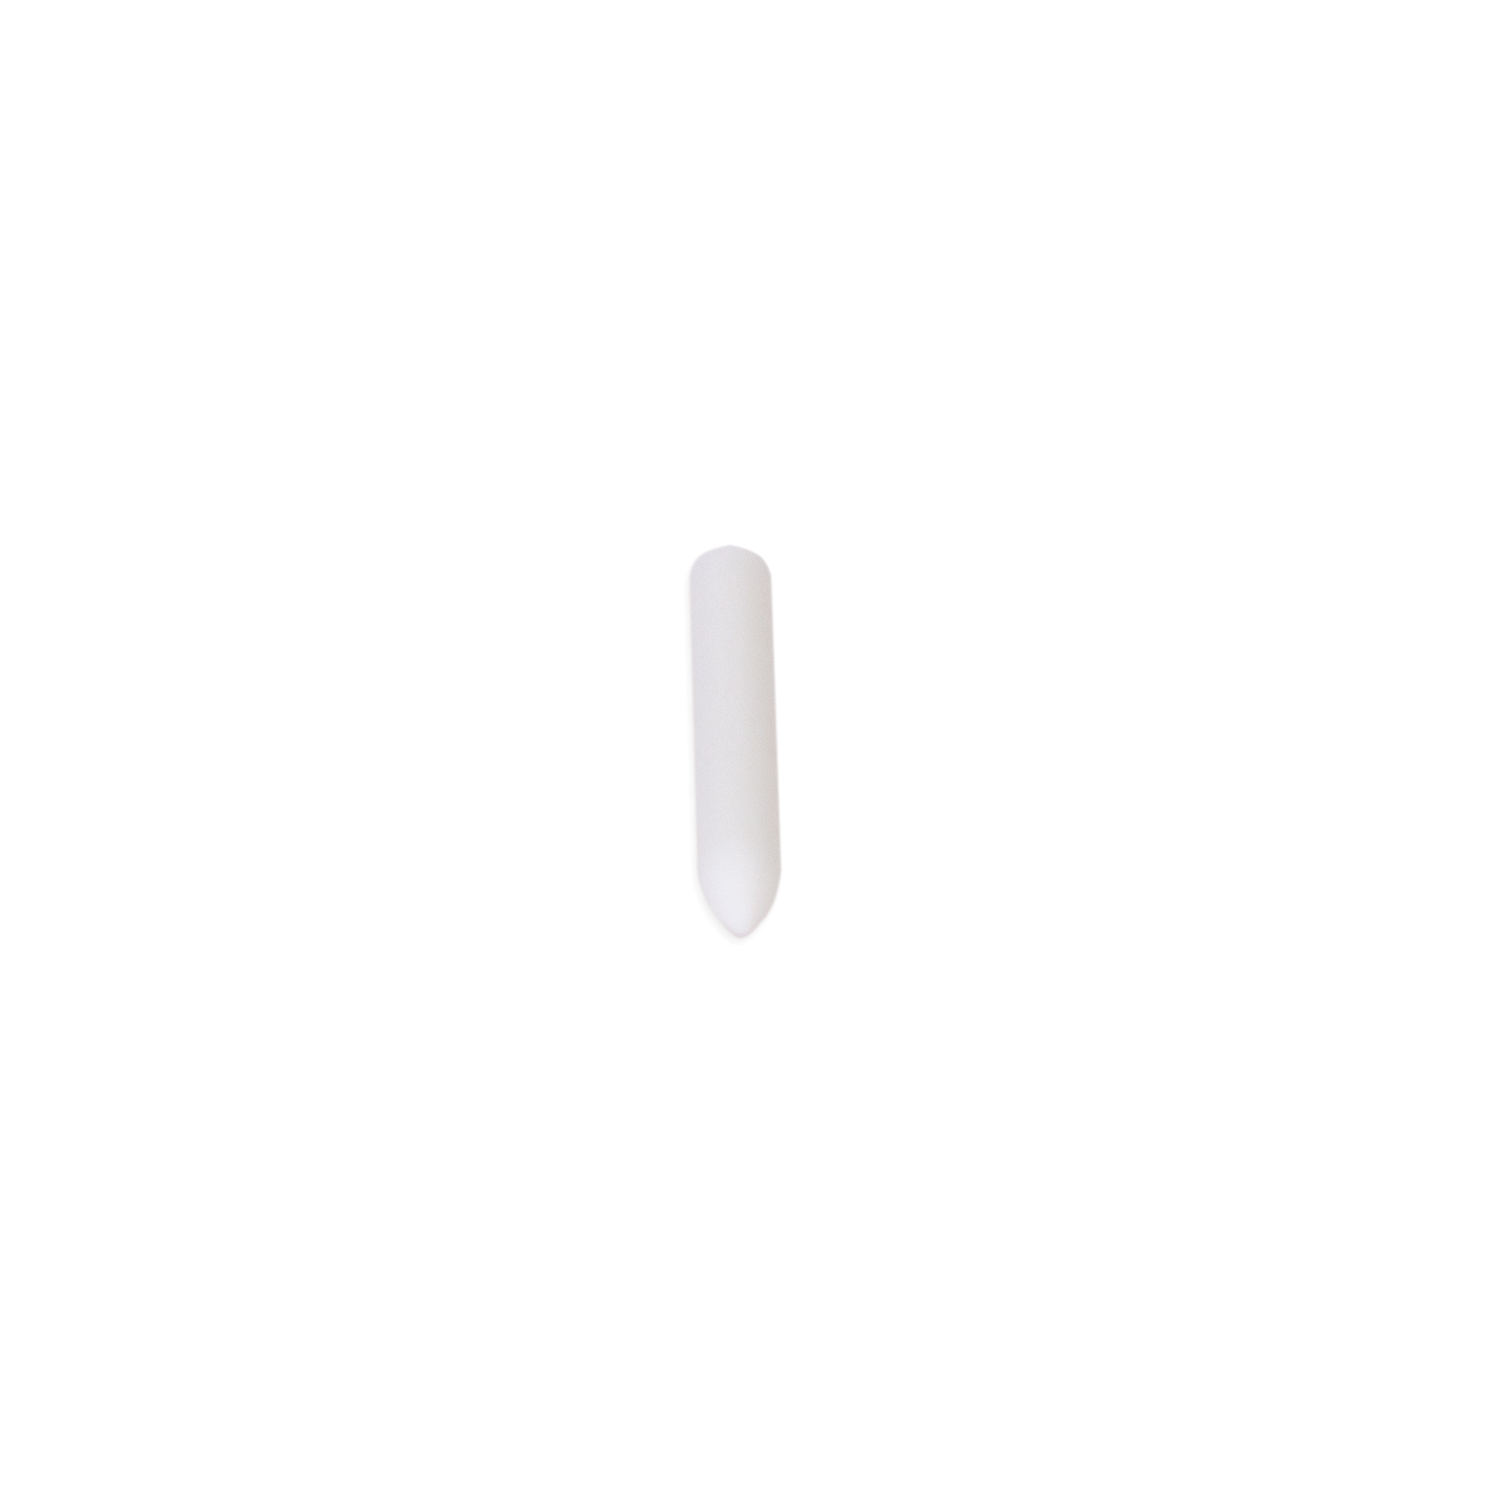 Feltro bianco, rotondo Ø 3,5 mm (100 pz.)